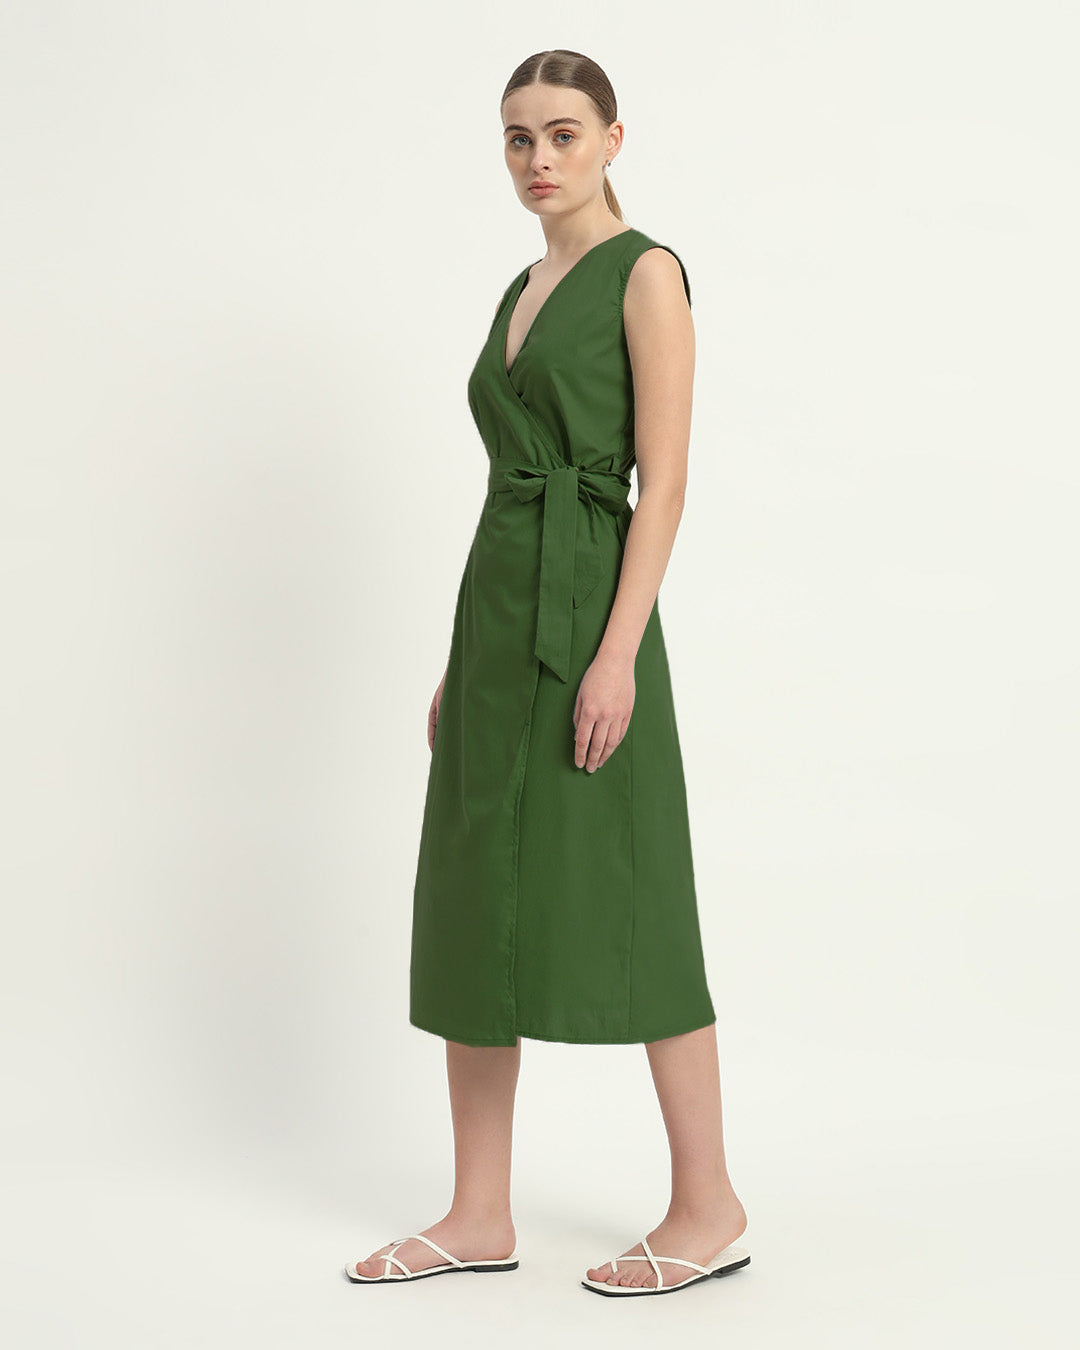 The Emerald Windsor Cotton Dress